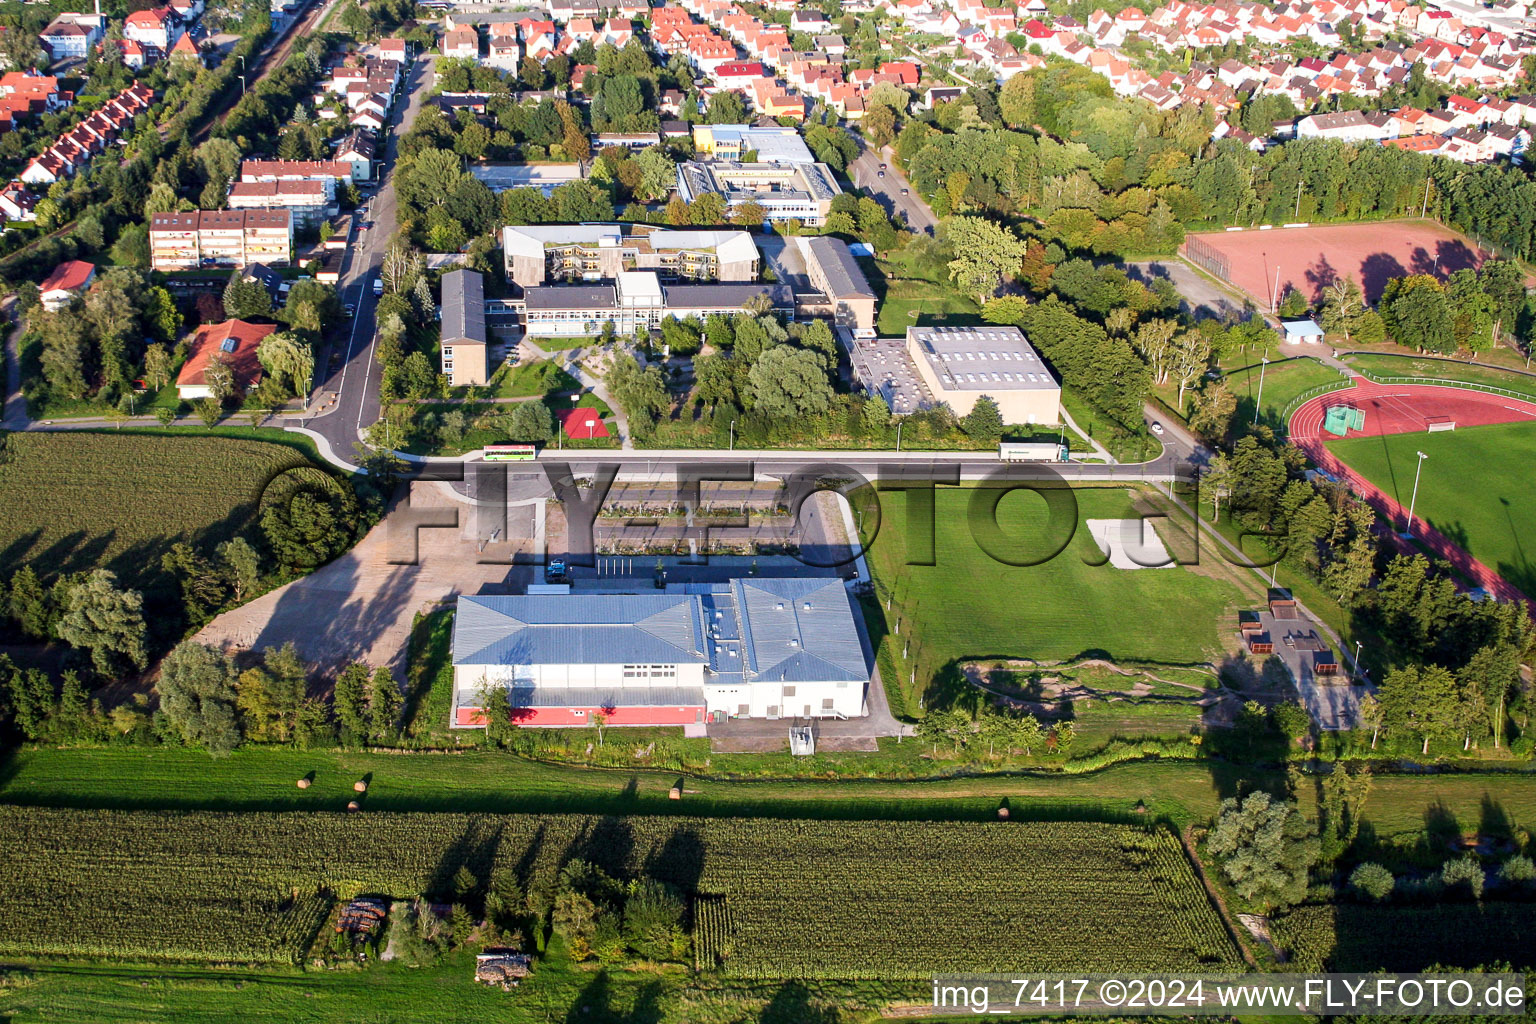 Bienwaldhalle multi-purpose hall in Kandel in the state Rhineland-Palatinate, Germany